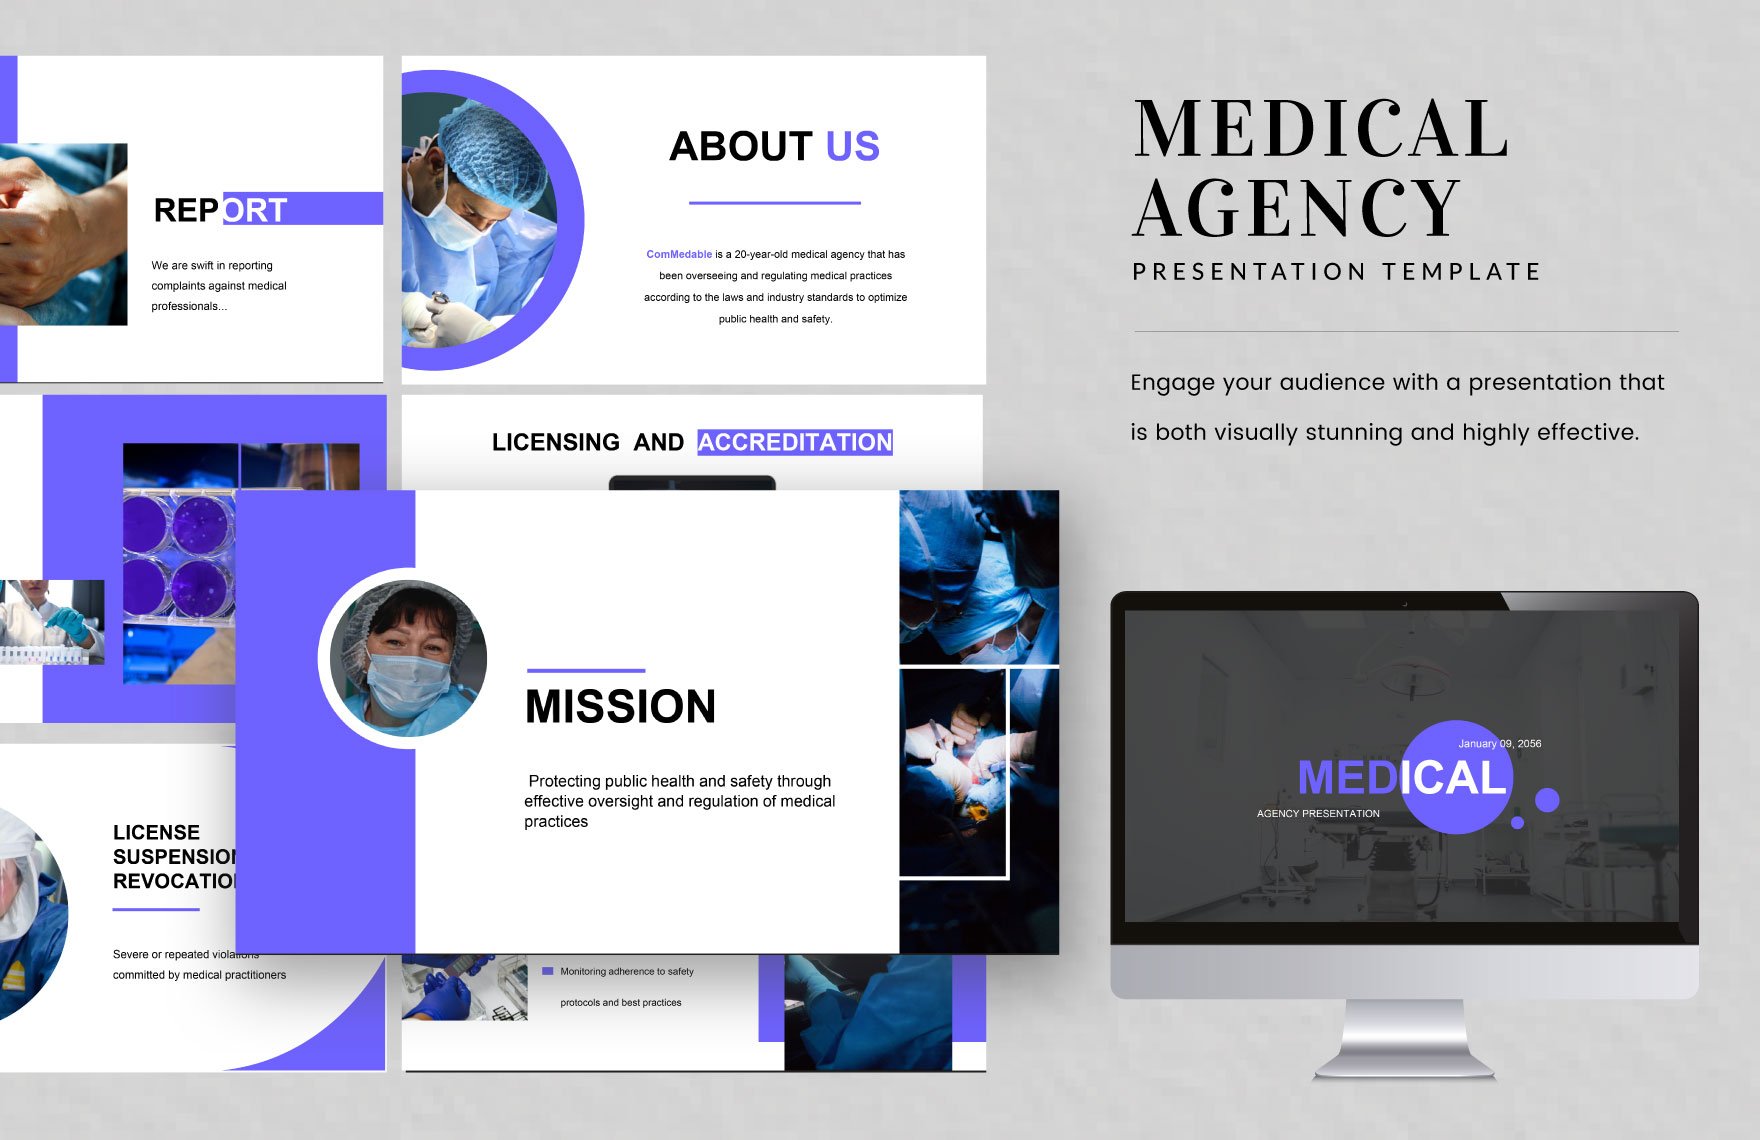 Medical Agency Presentation Template